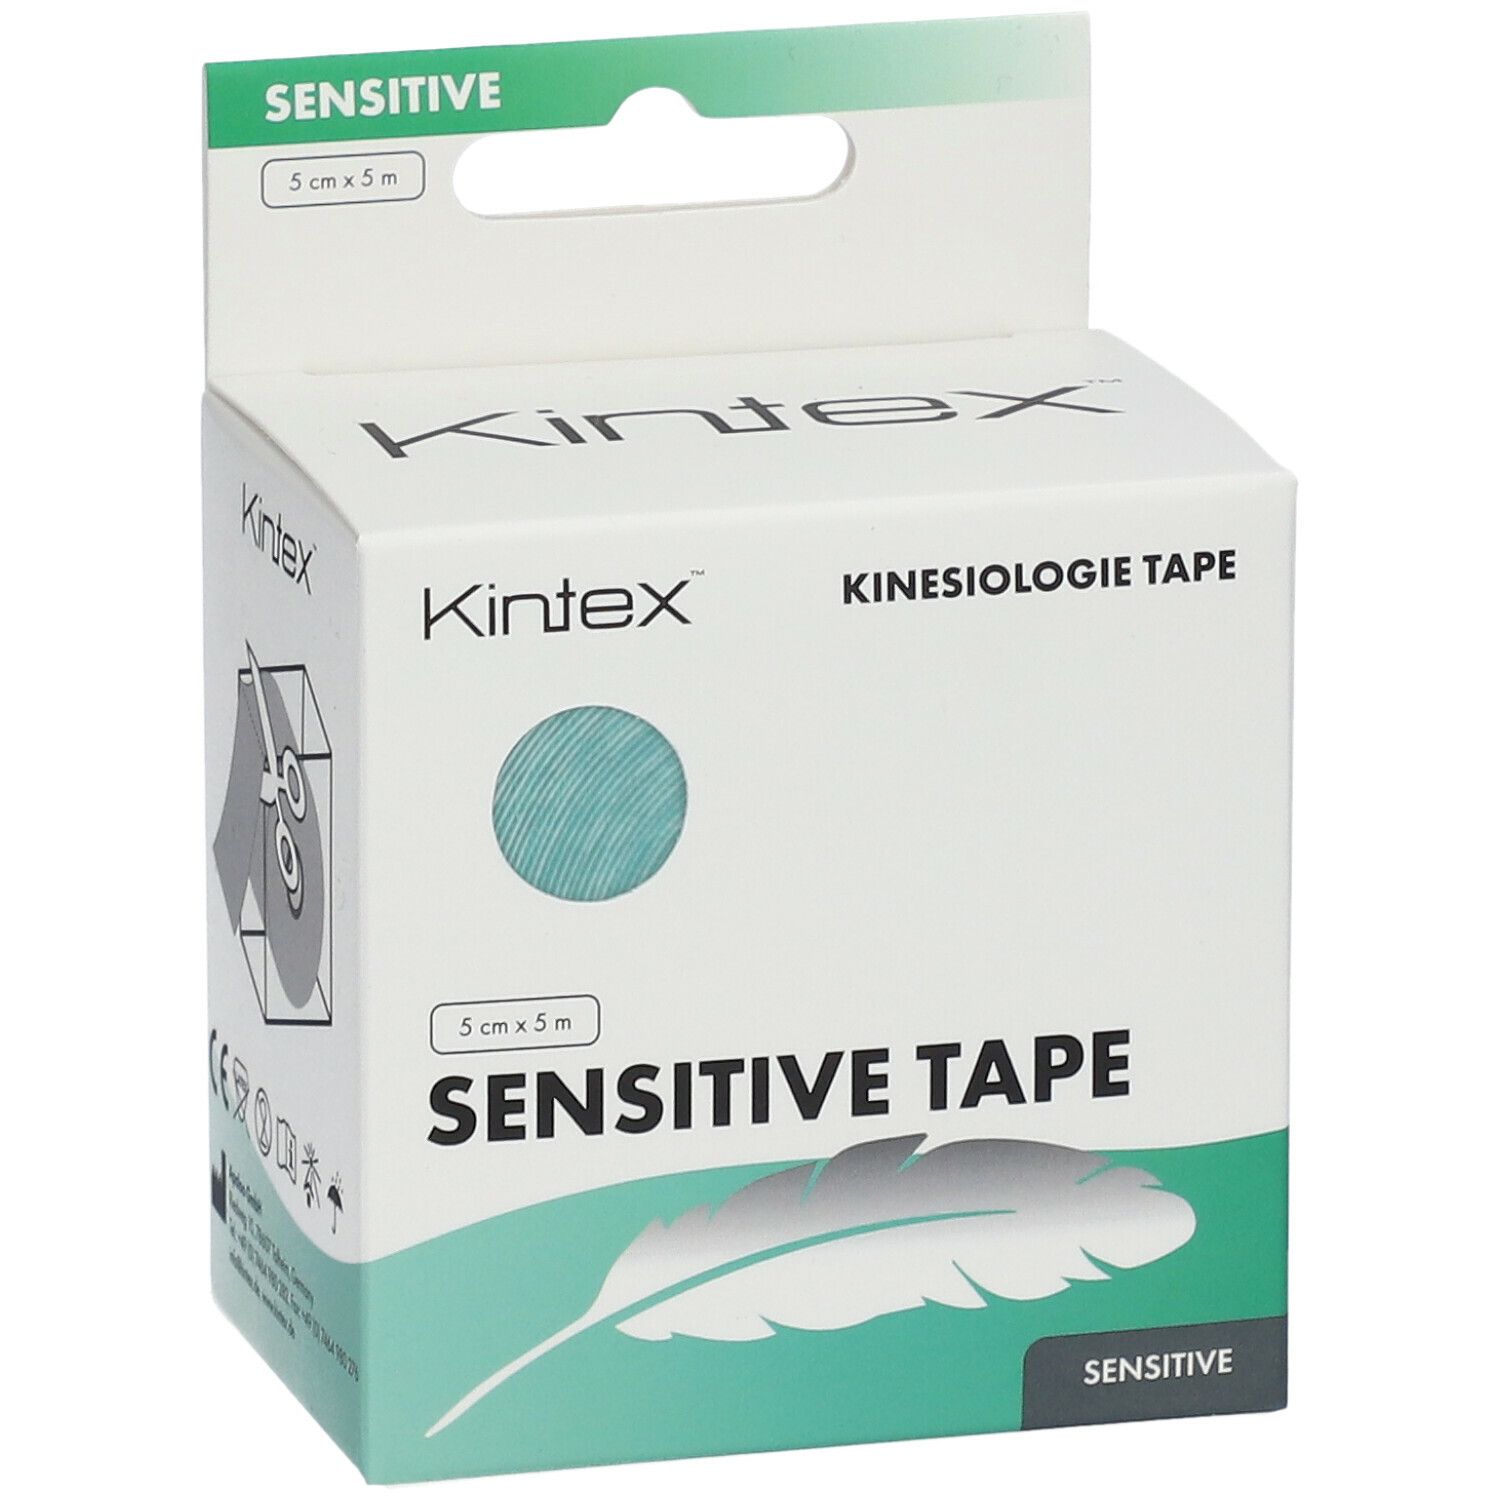 Kinesiology Kintex™ Sensitive 5 APOTHEKE St 1 SHOP Tape x - cm 5